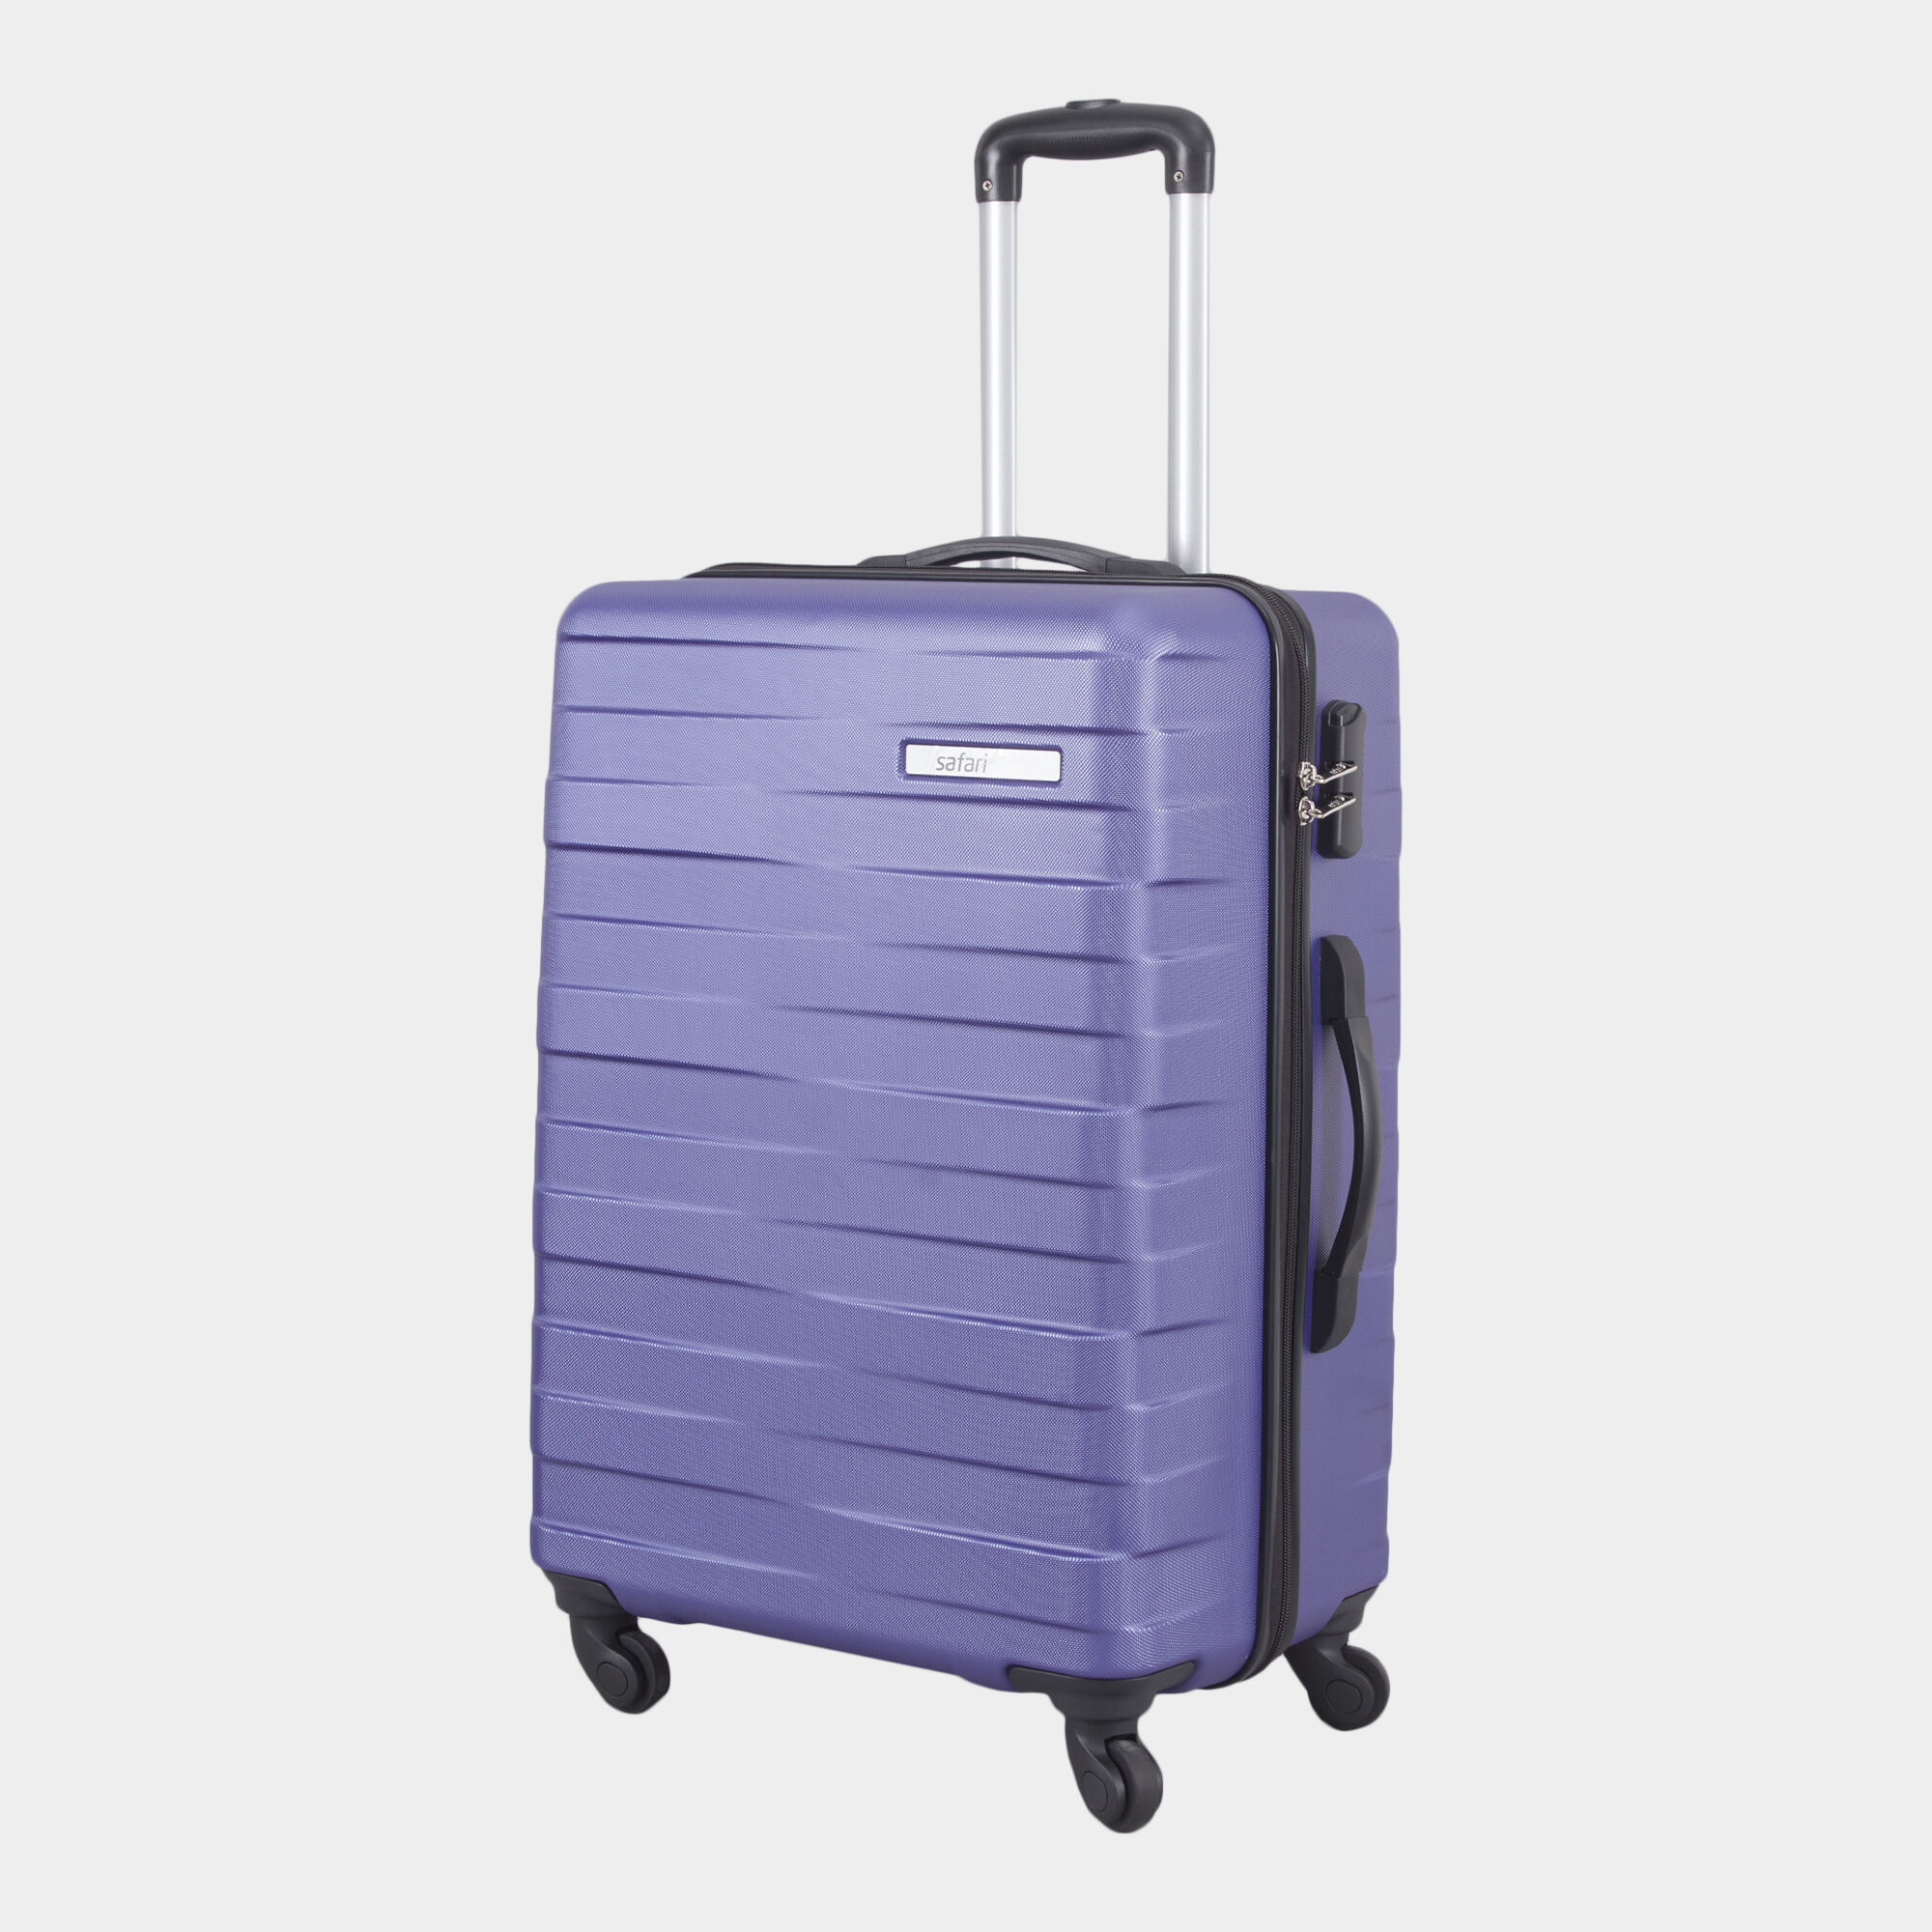 Safari Luggage Bags Set of 3 Number Lock, 4 Wheels, Hardside Small, Medium  & Large Size (